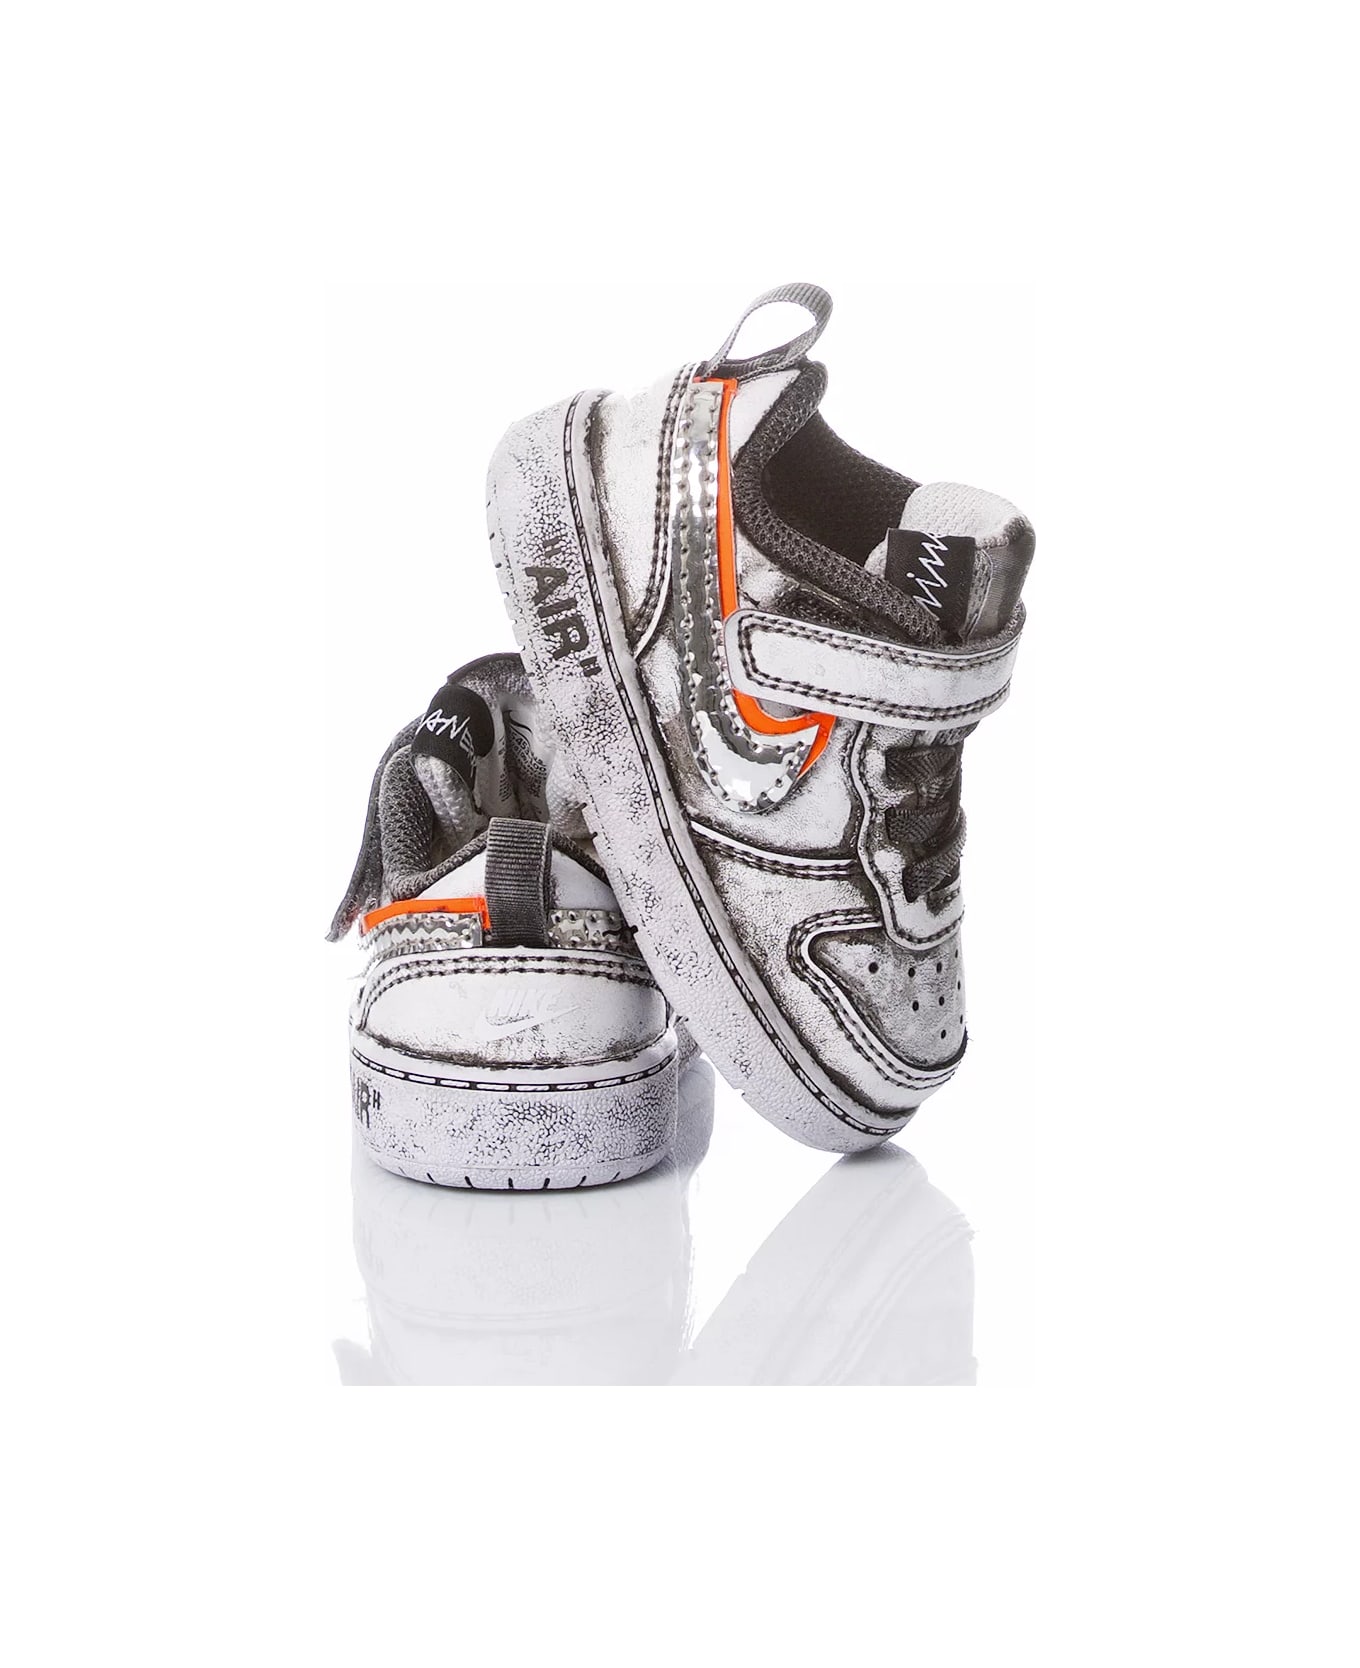 Mimanera Nike Baby: Customize Your Little Shoe! シューズ